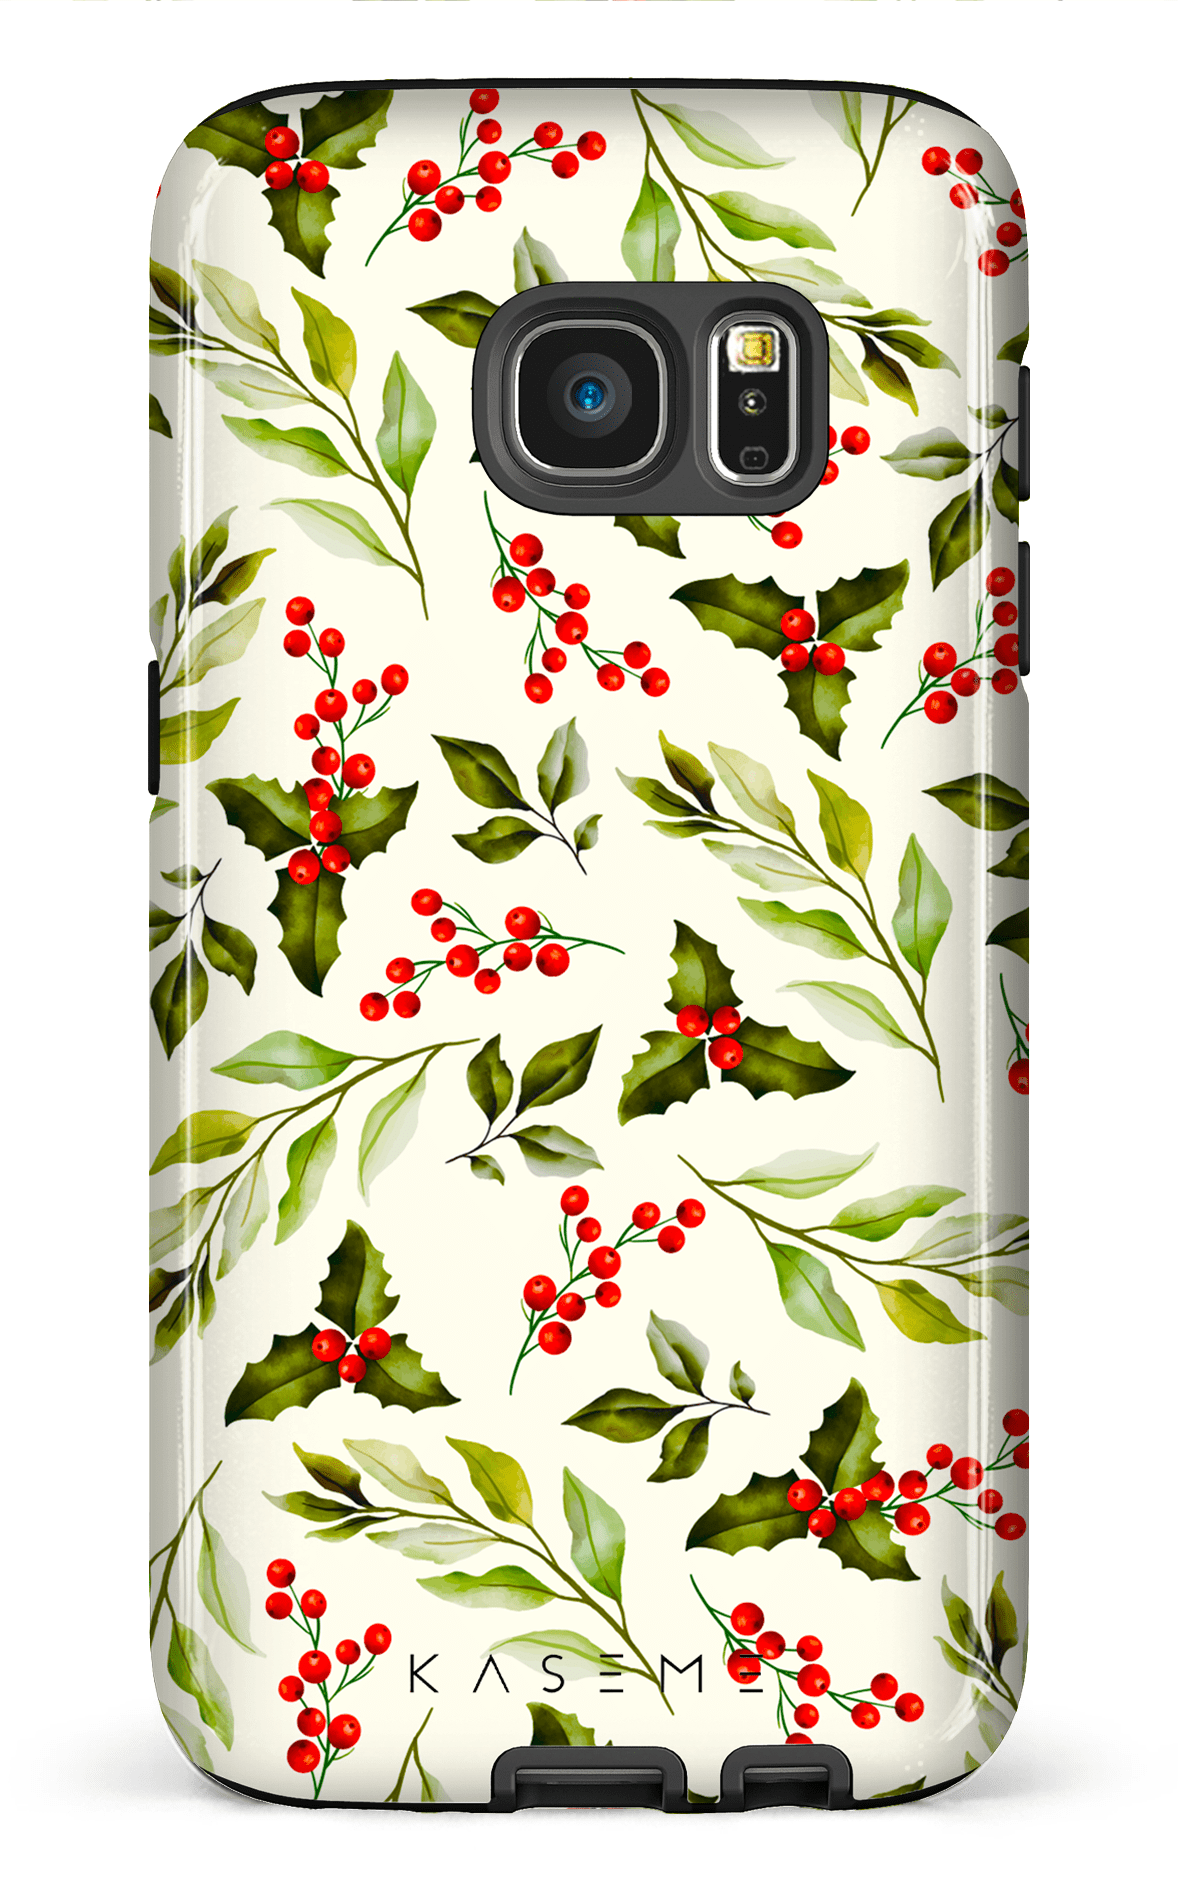 Mistletoe - Galaxy S7